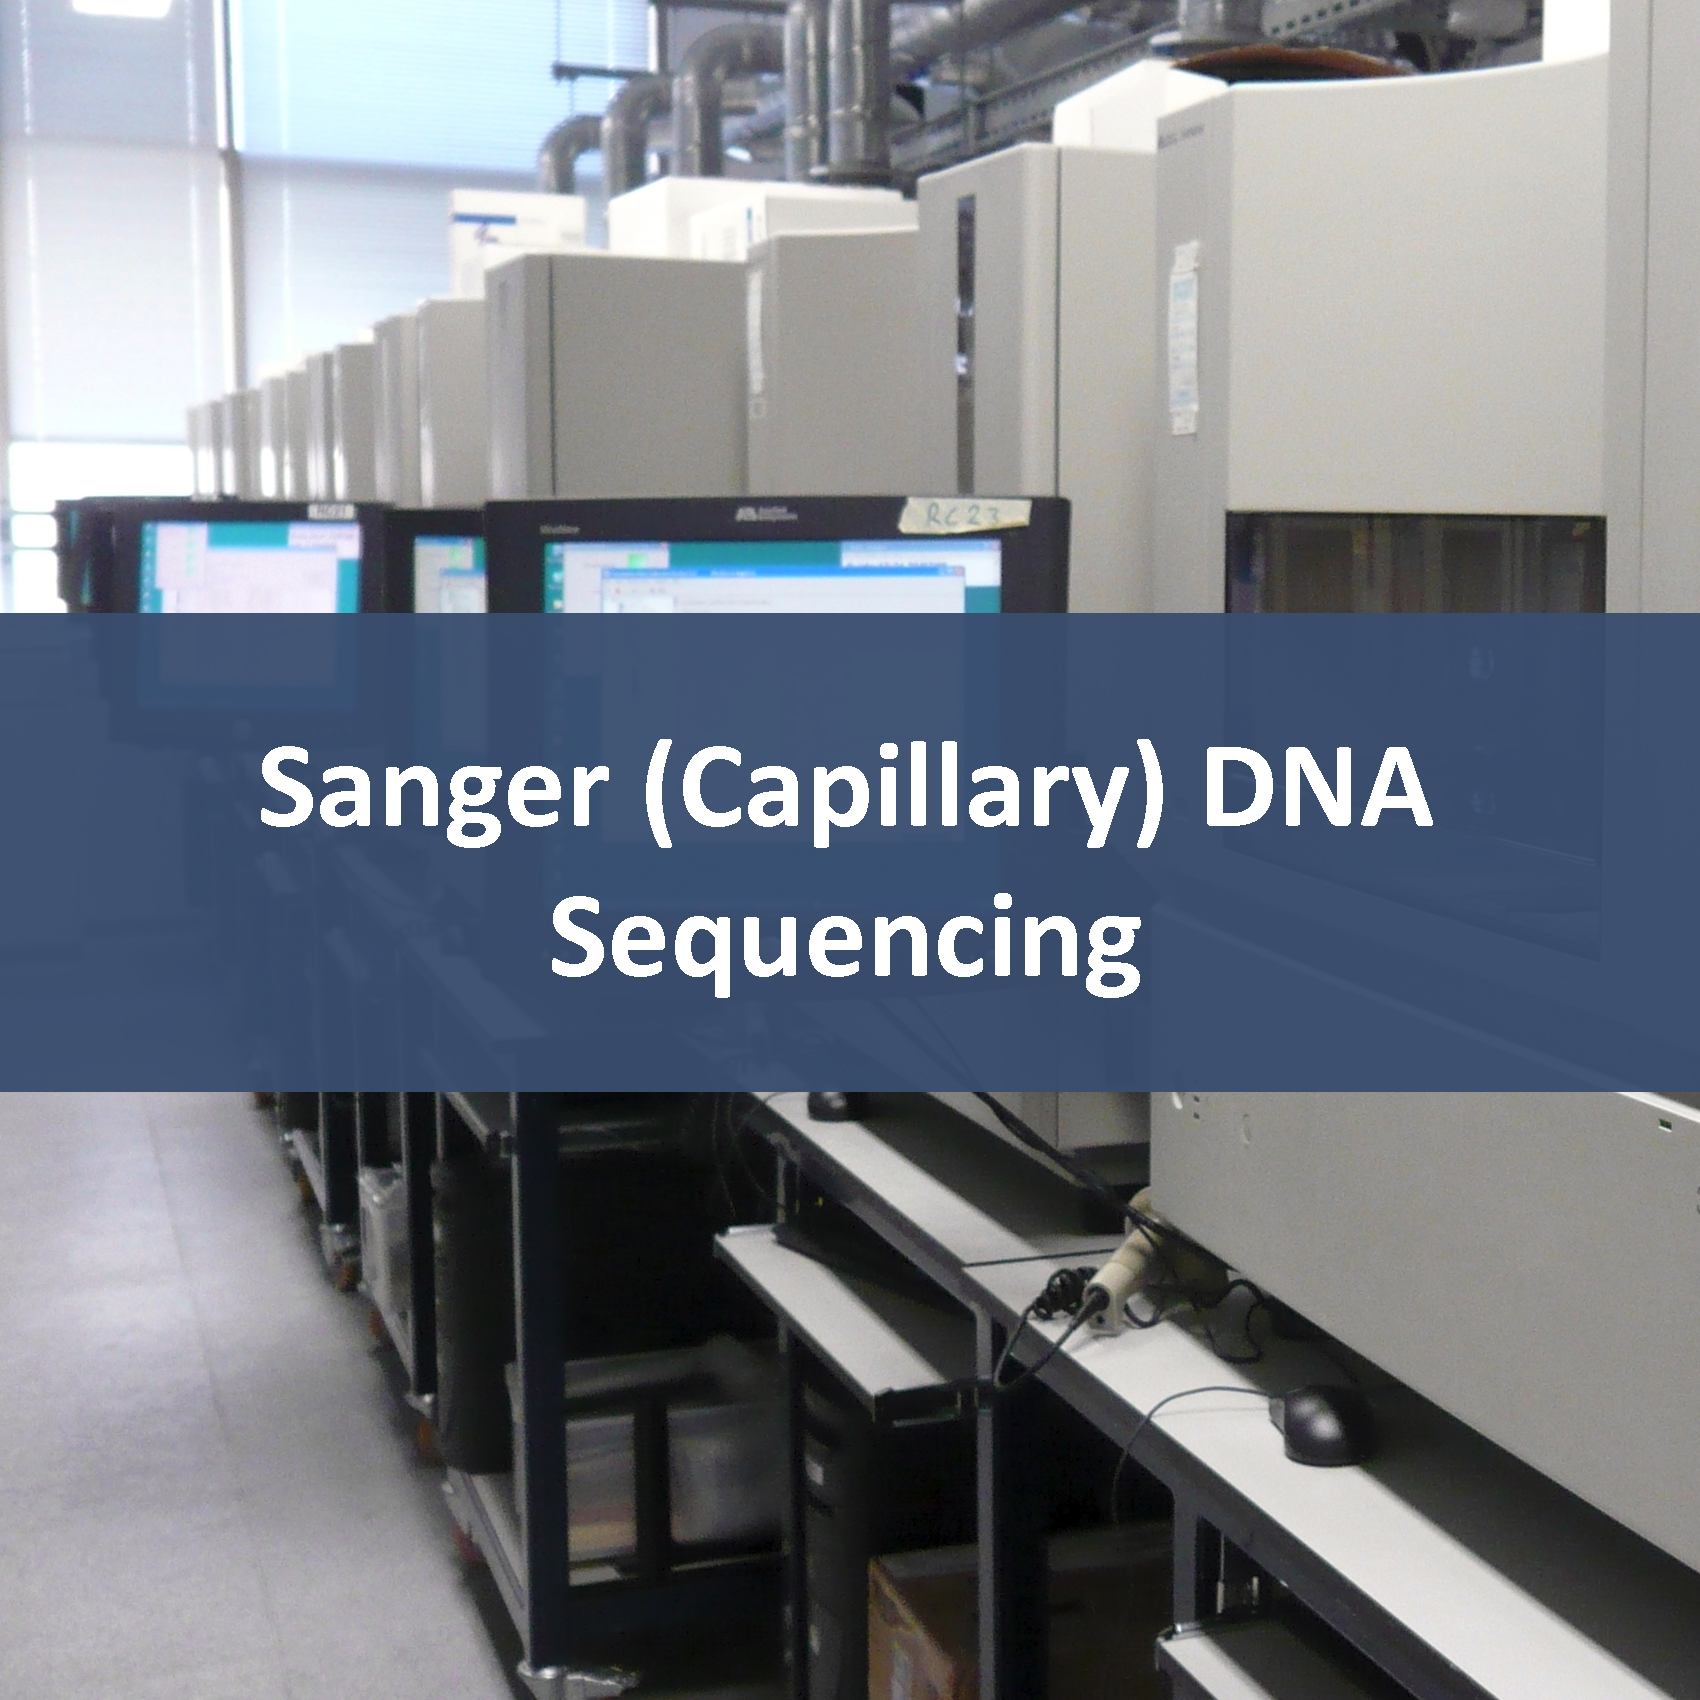 Sanger (ABI3720xl) DNA Sequencing